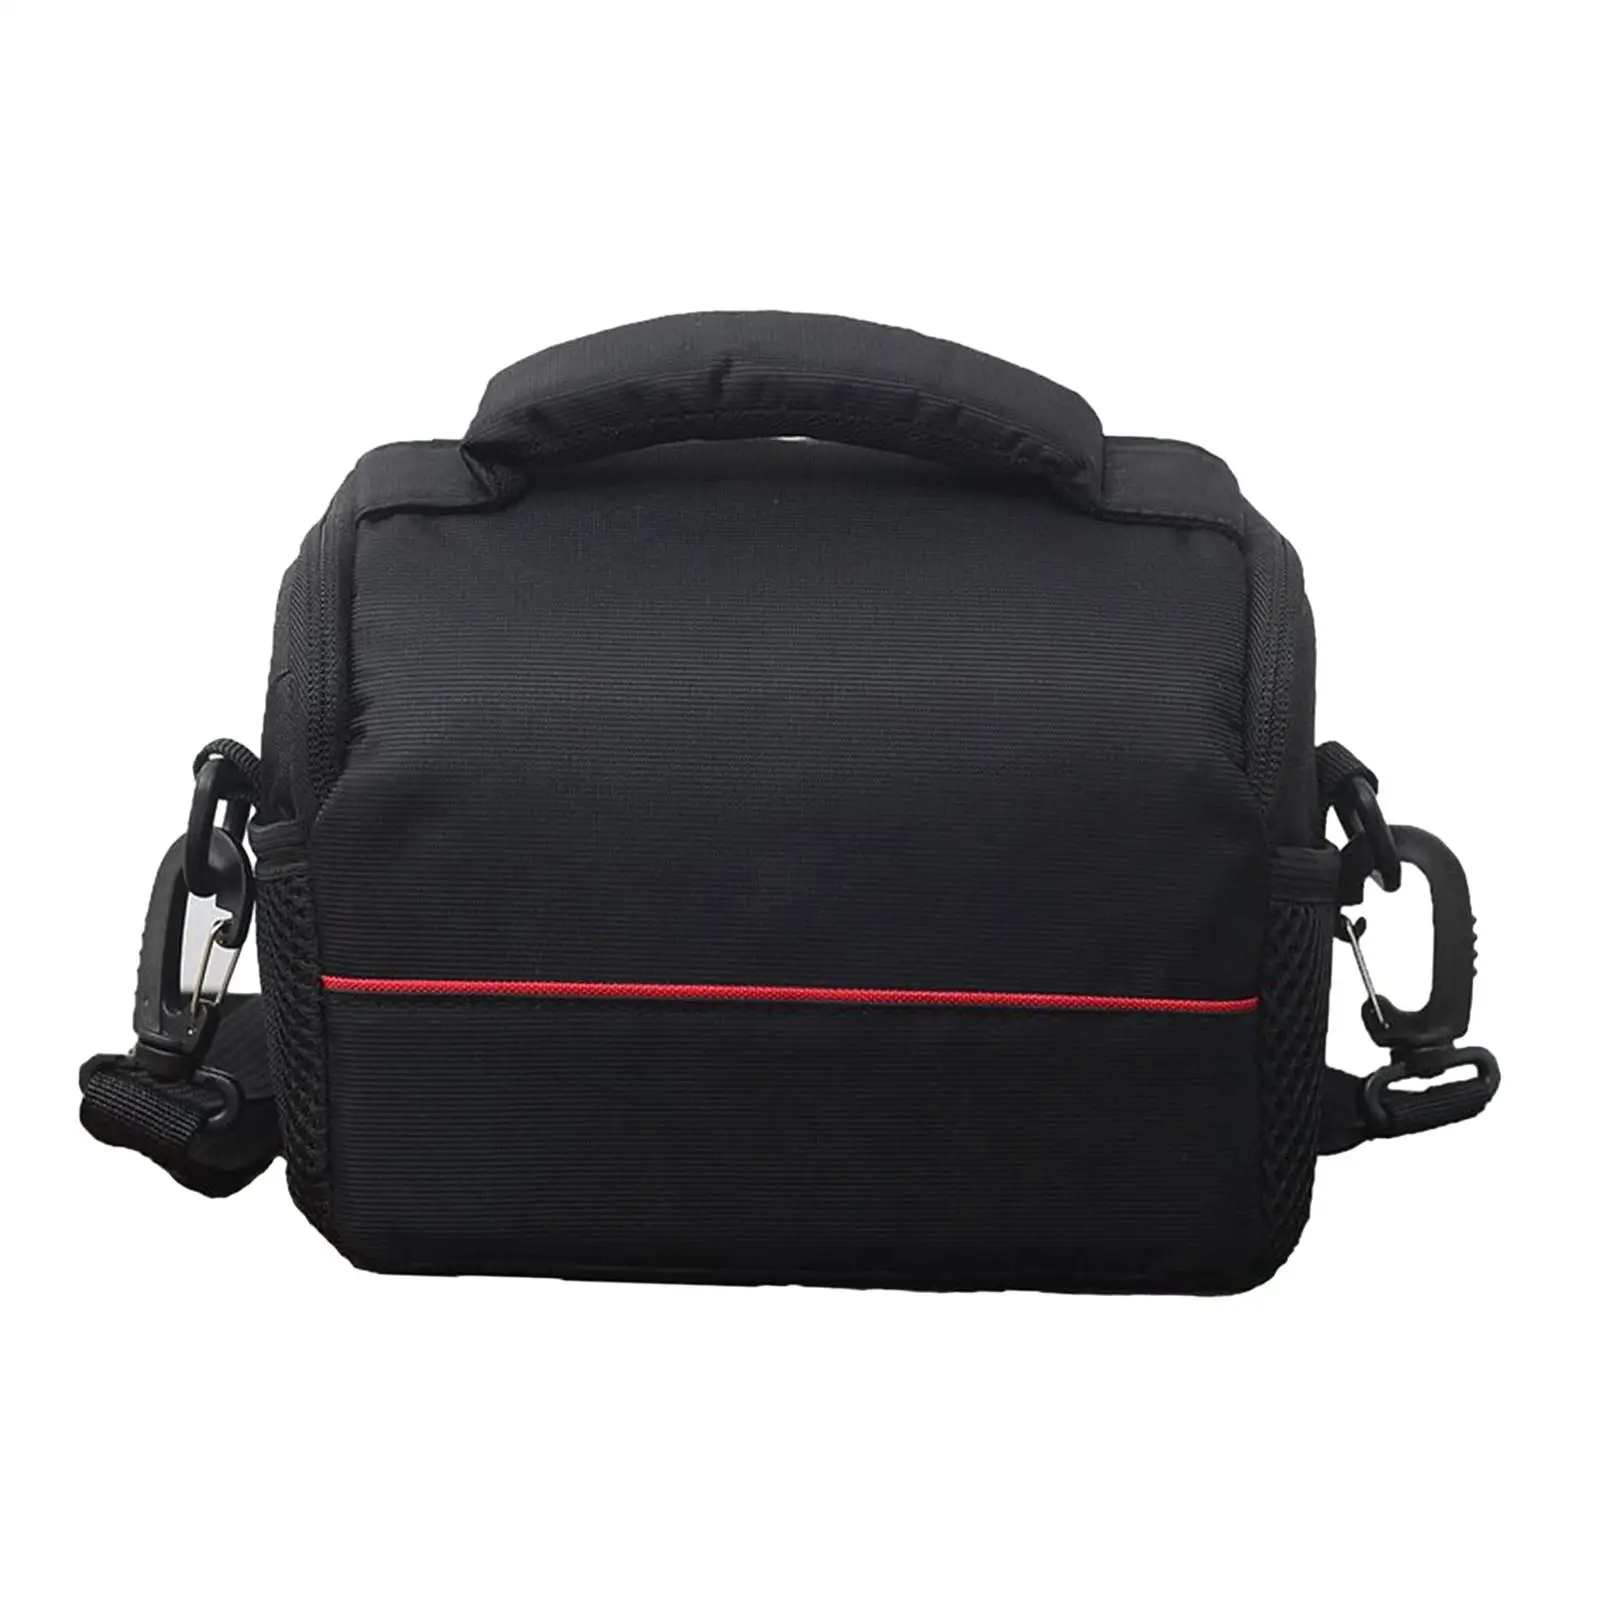 Camera Bag Black Compact Stylish Messenger Bag Travel Photography Bag Small Camera Bag for Women Men DSLR/slr/mirrorless Cameras